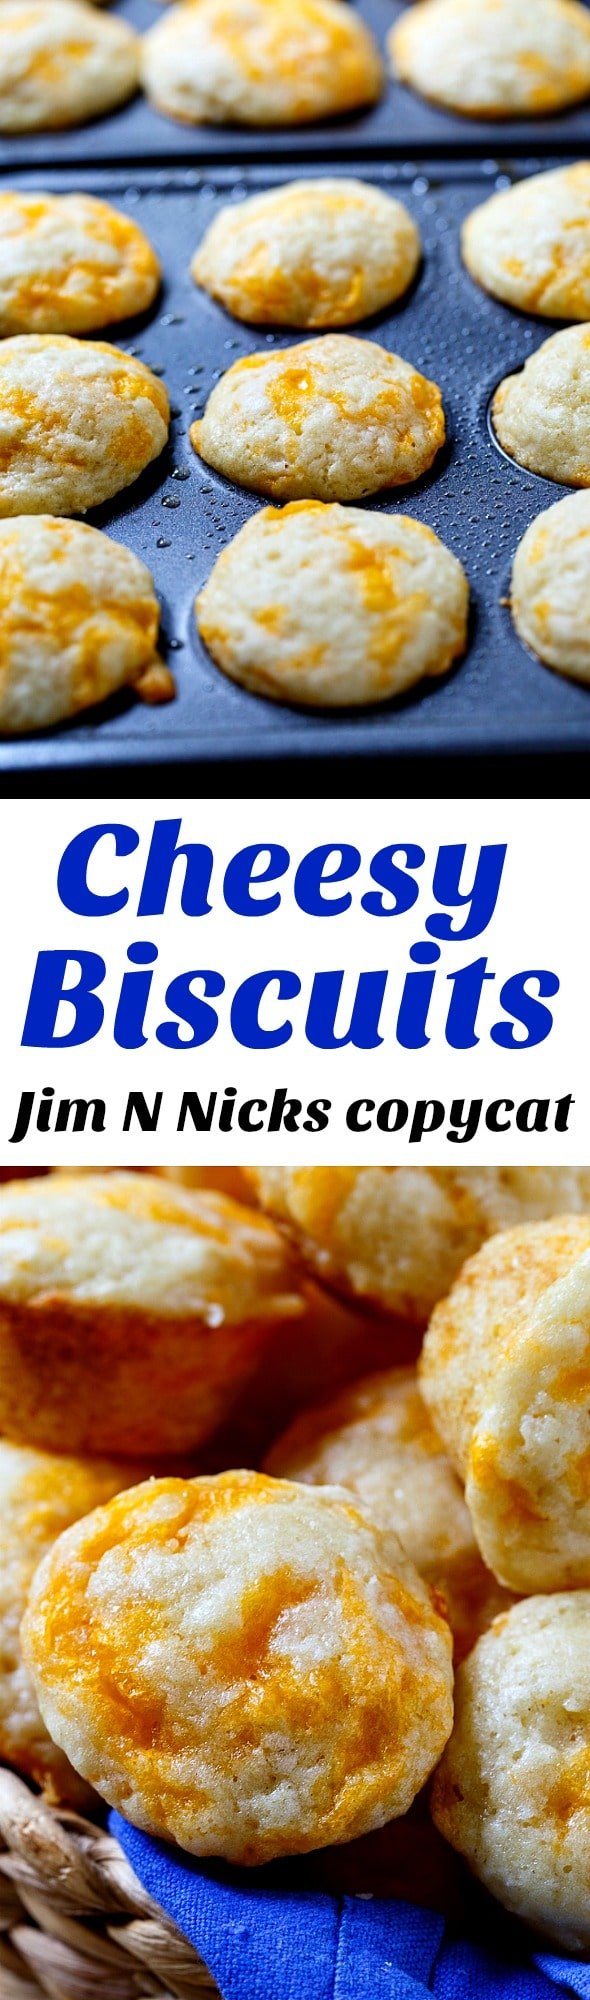 Jim 'n Nick's Cheesy Biscuits copycat